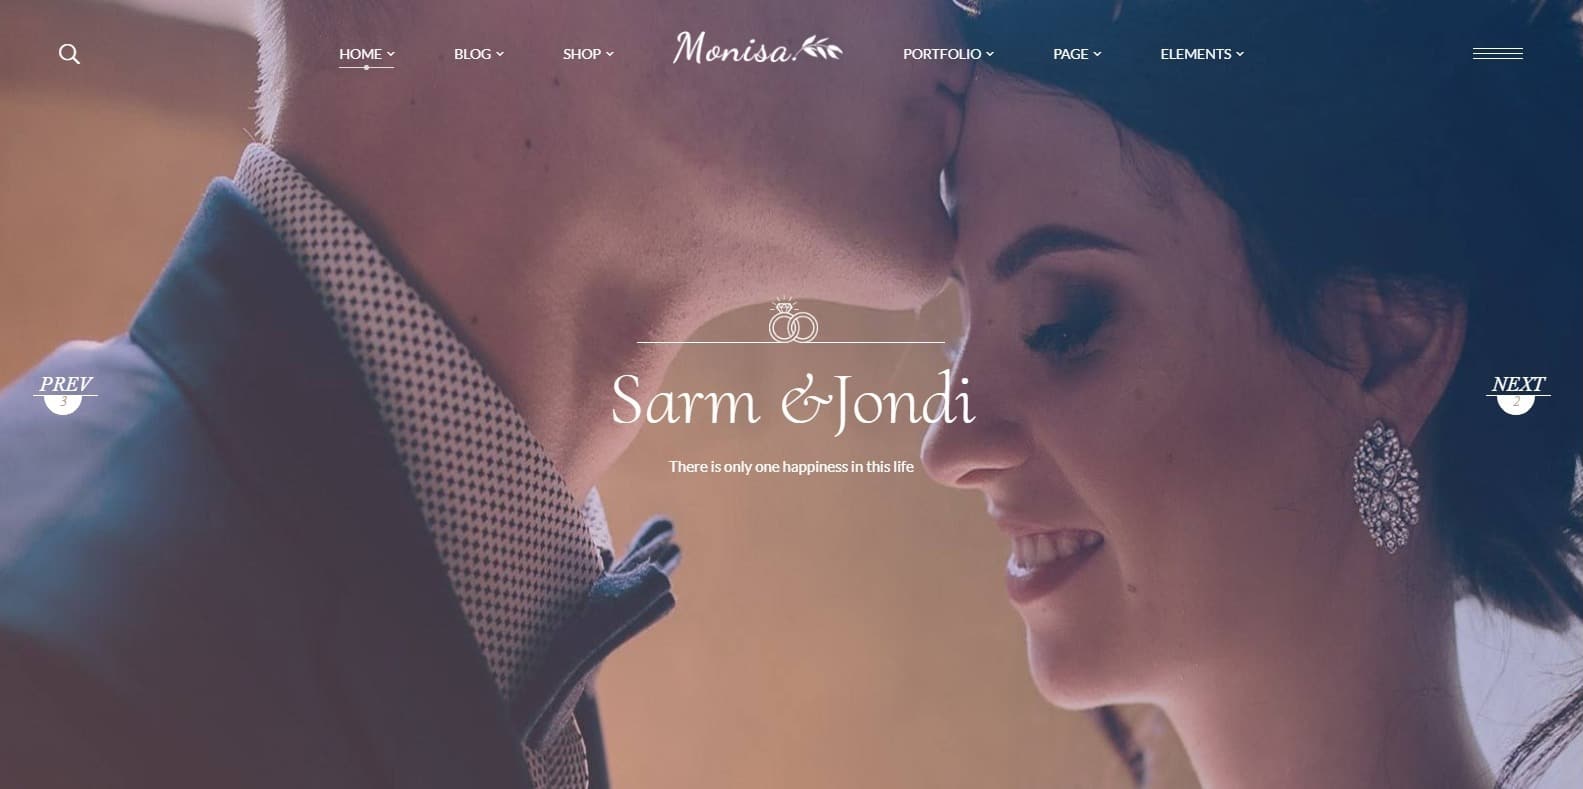 monisa-family-reunion-website-template